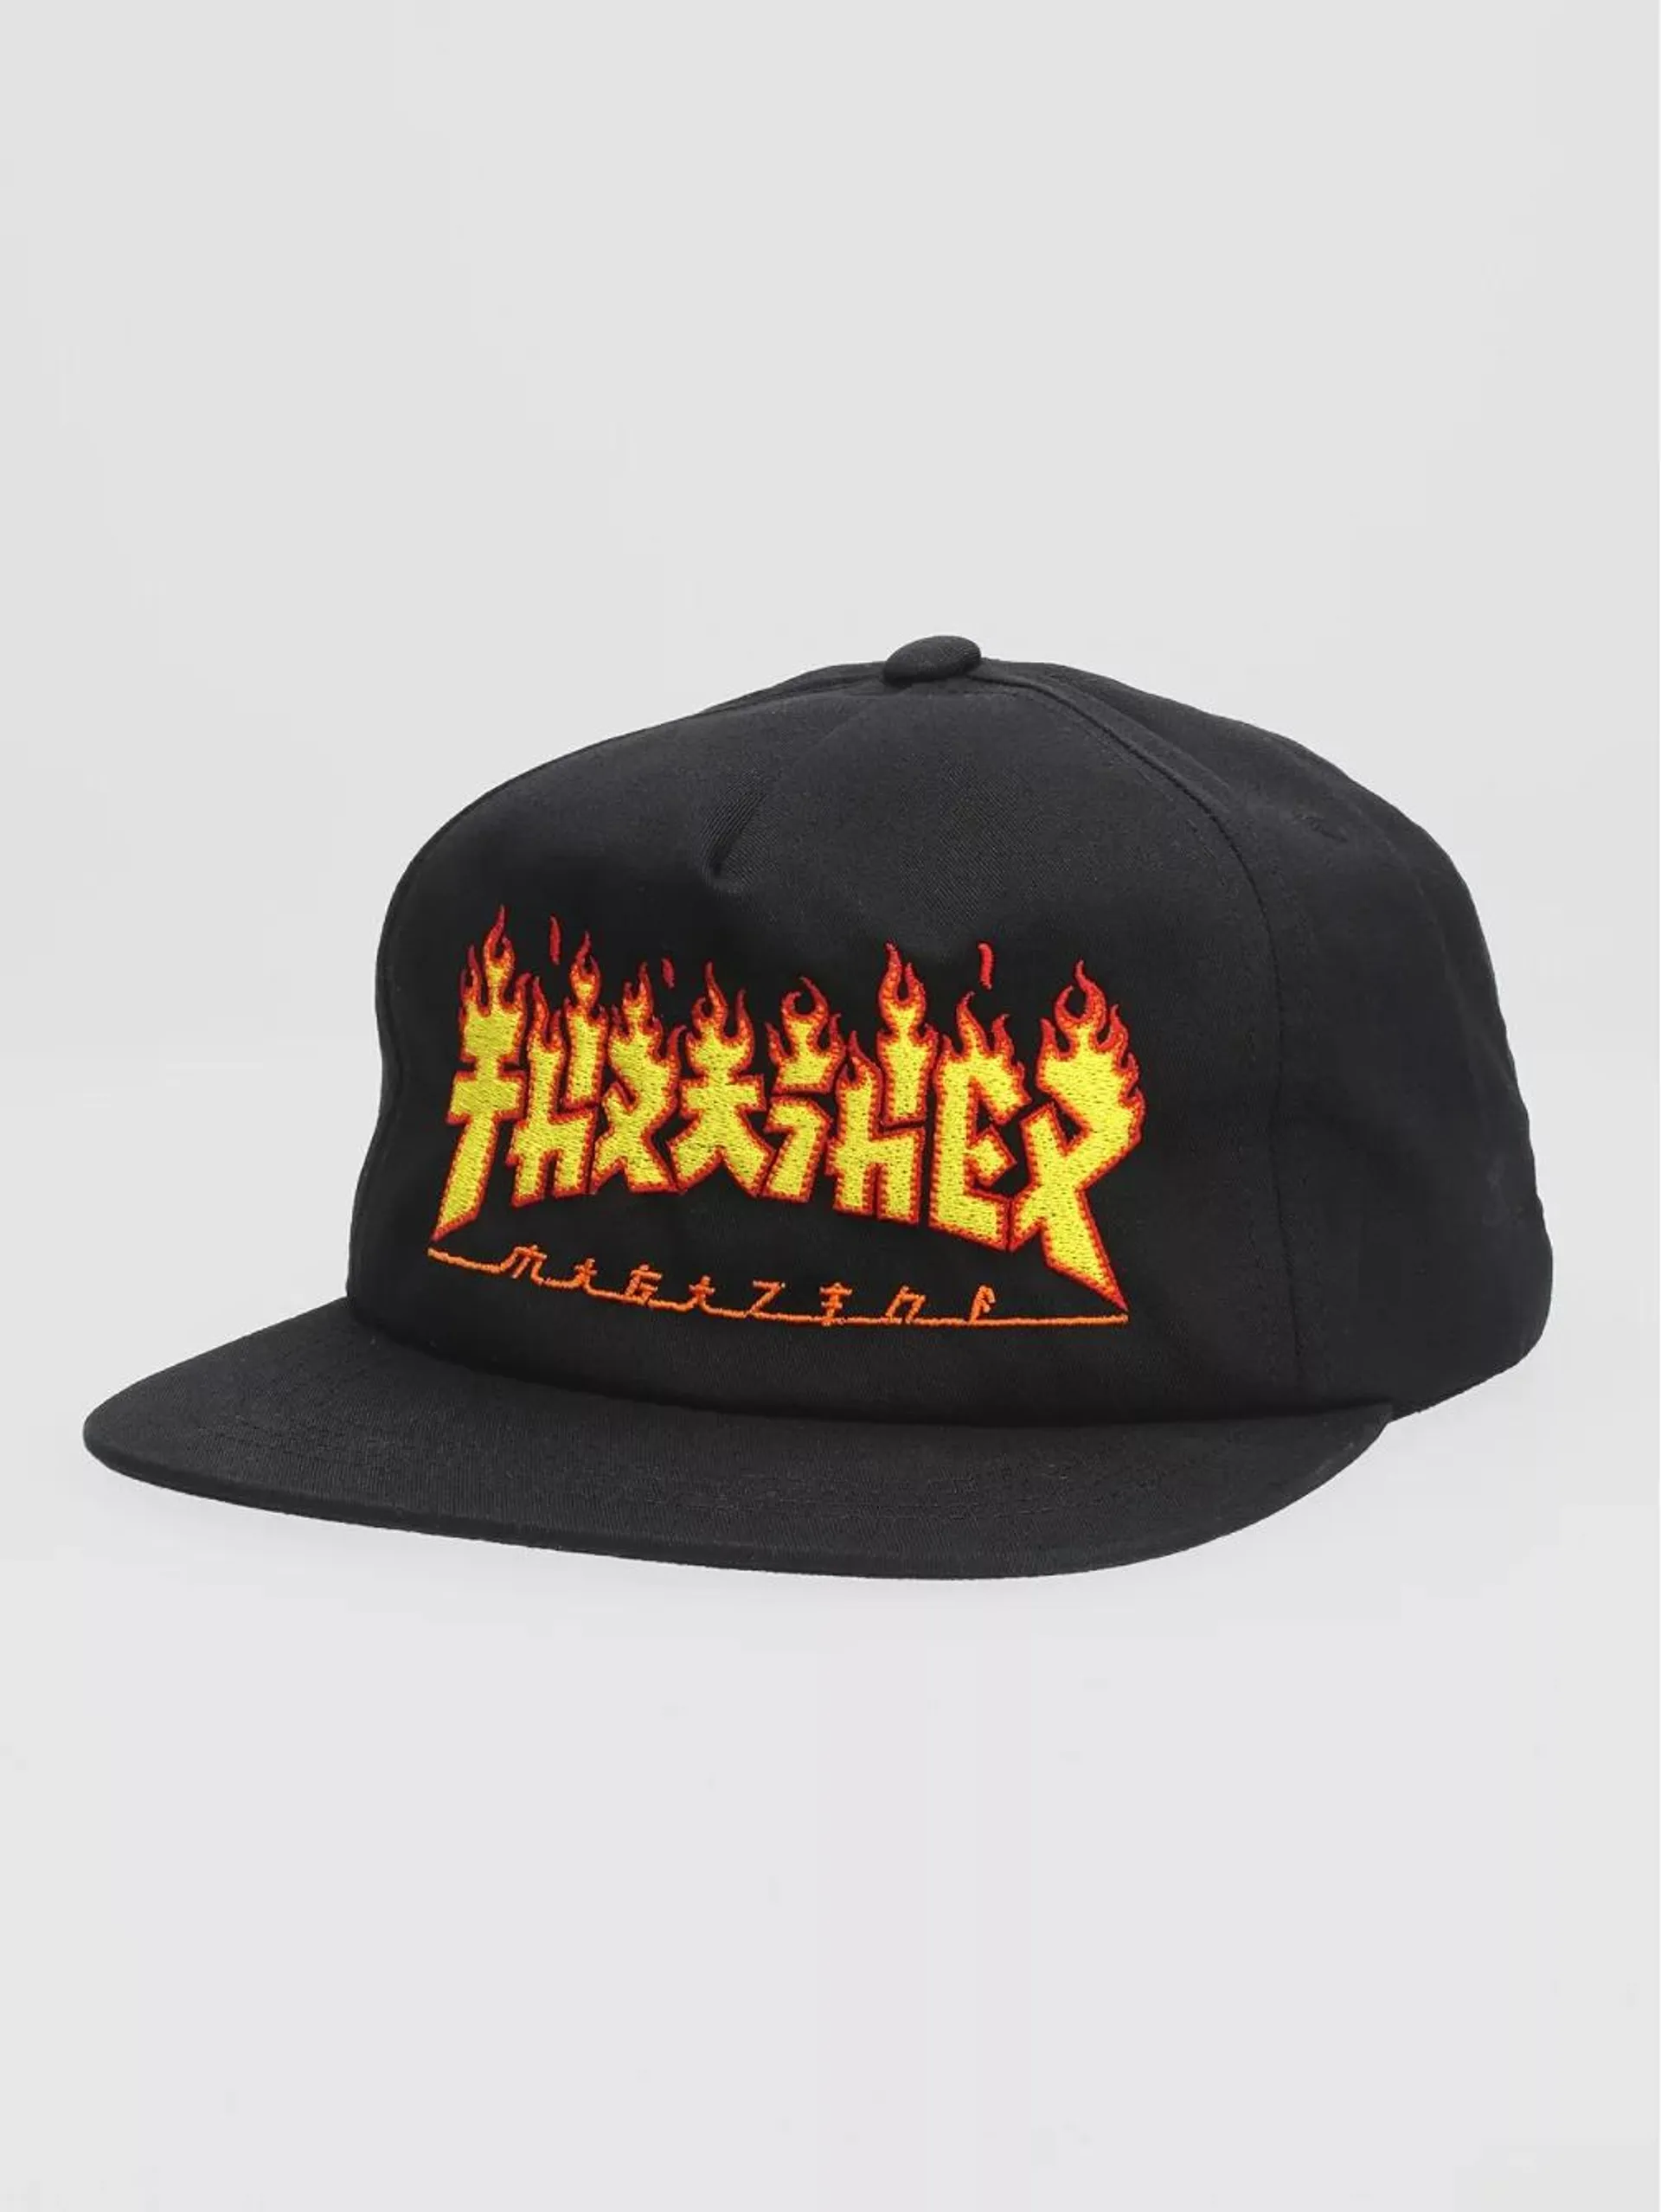 Godzilla Flame Snapback Cap